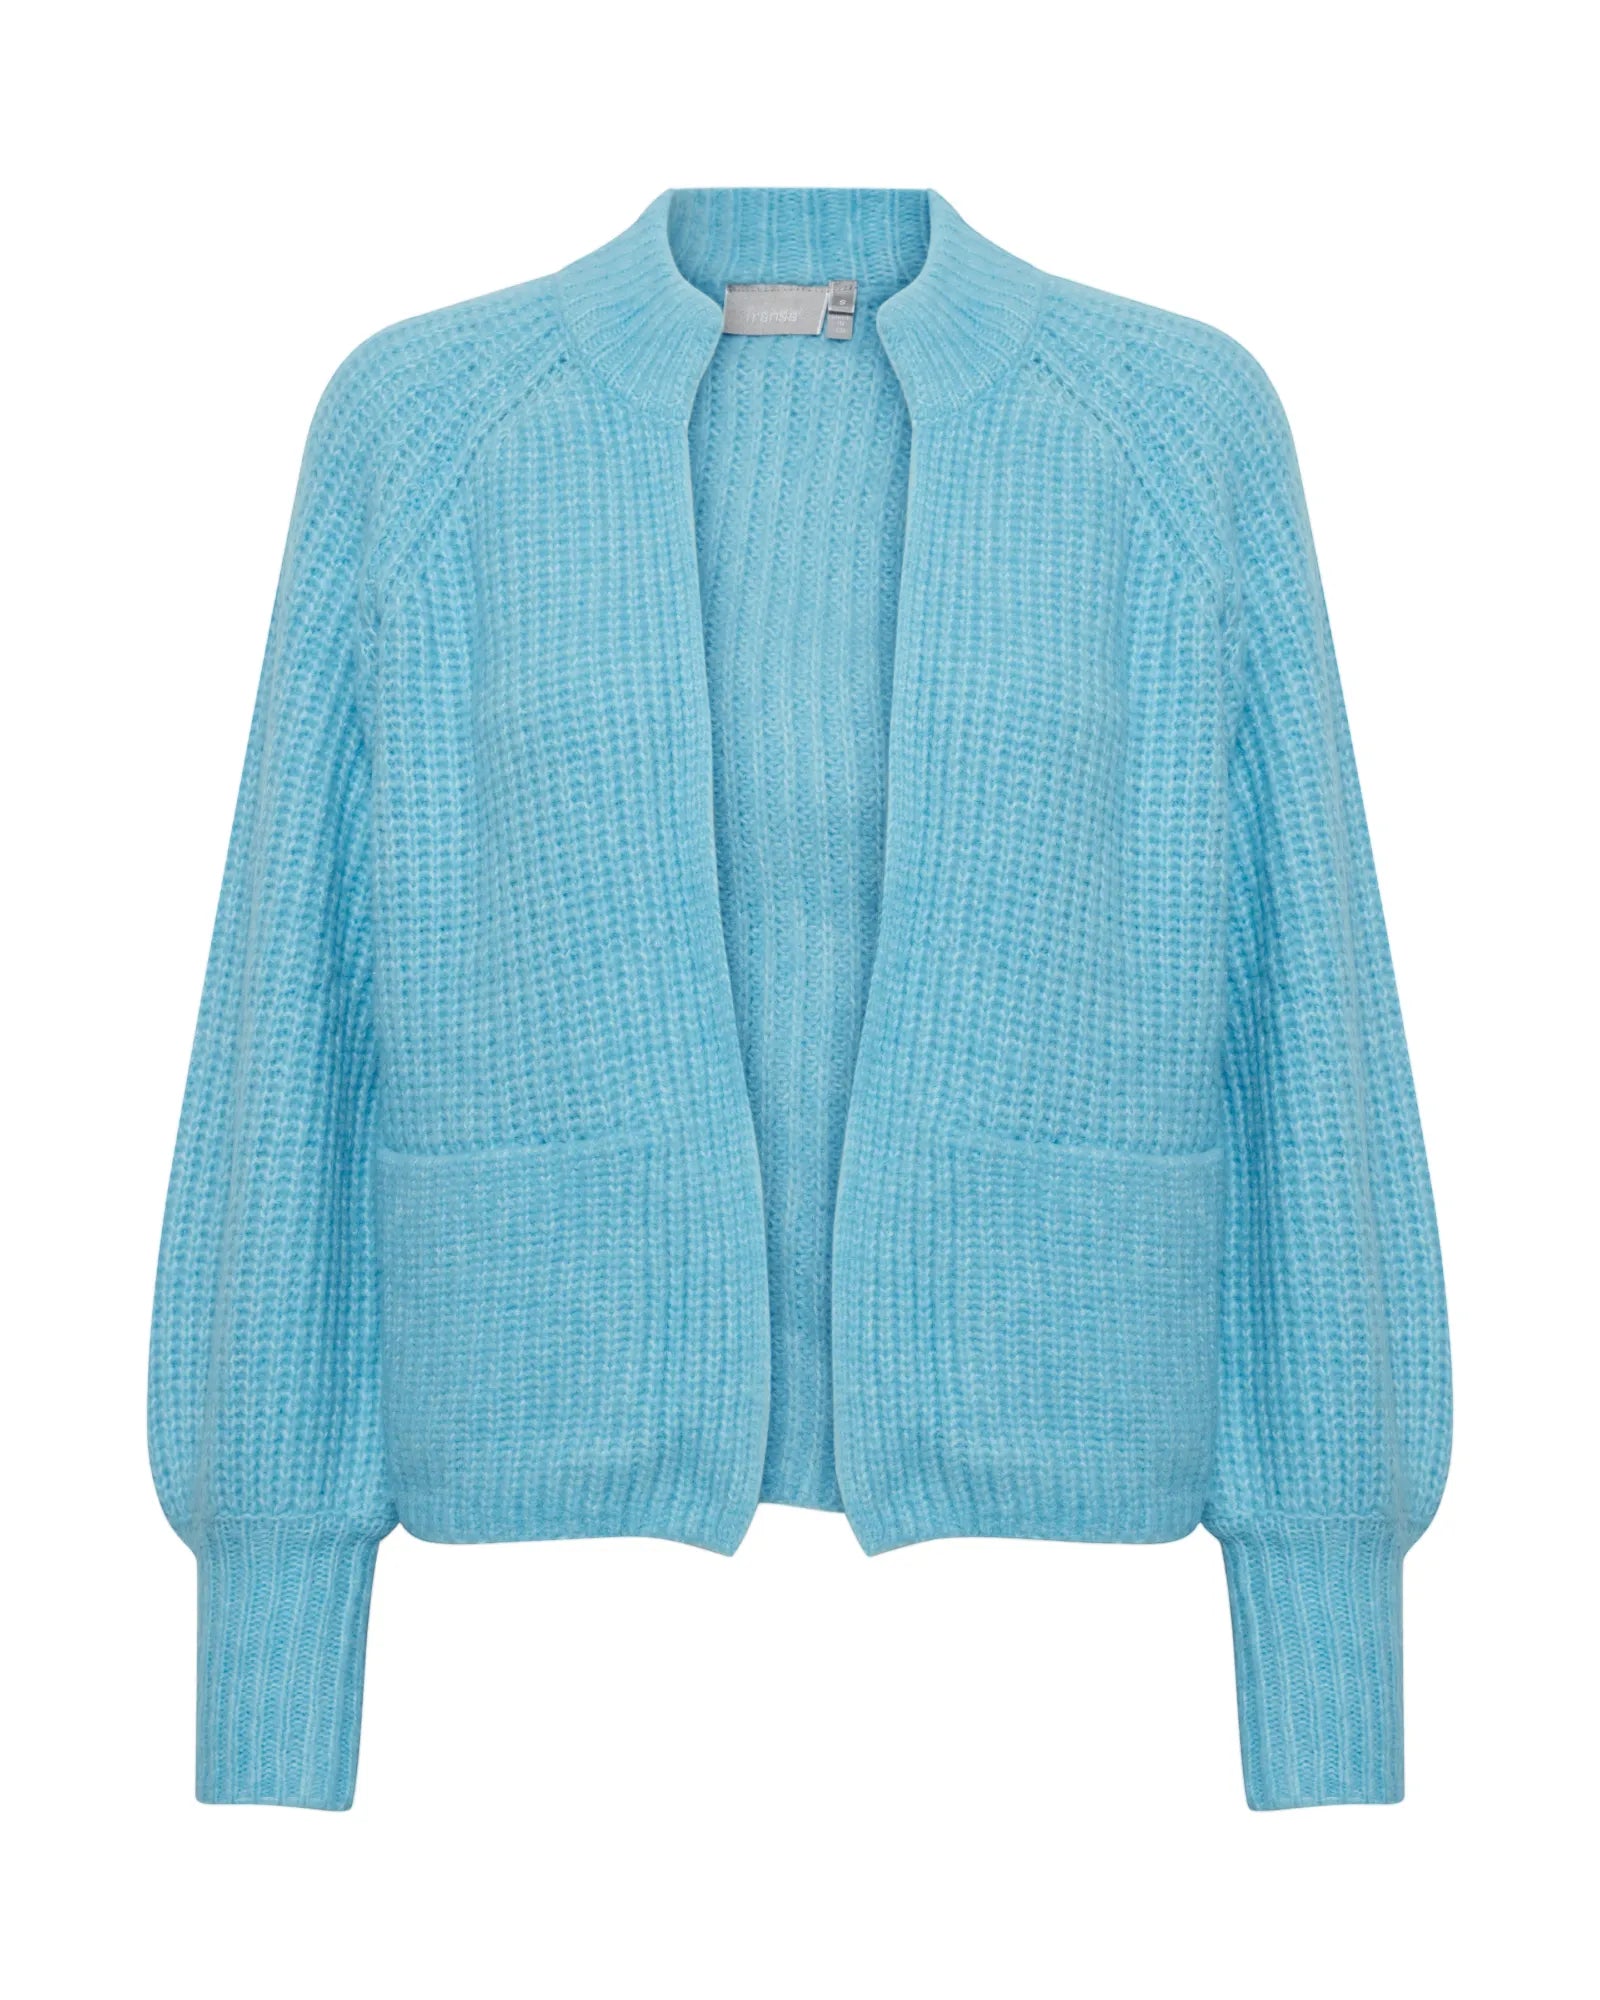 Beverly Knitted Cardigan - Ethereal Blue Melange